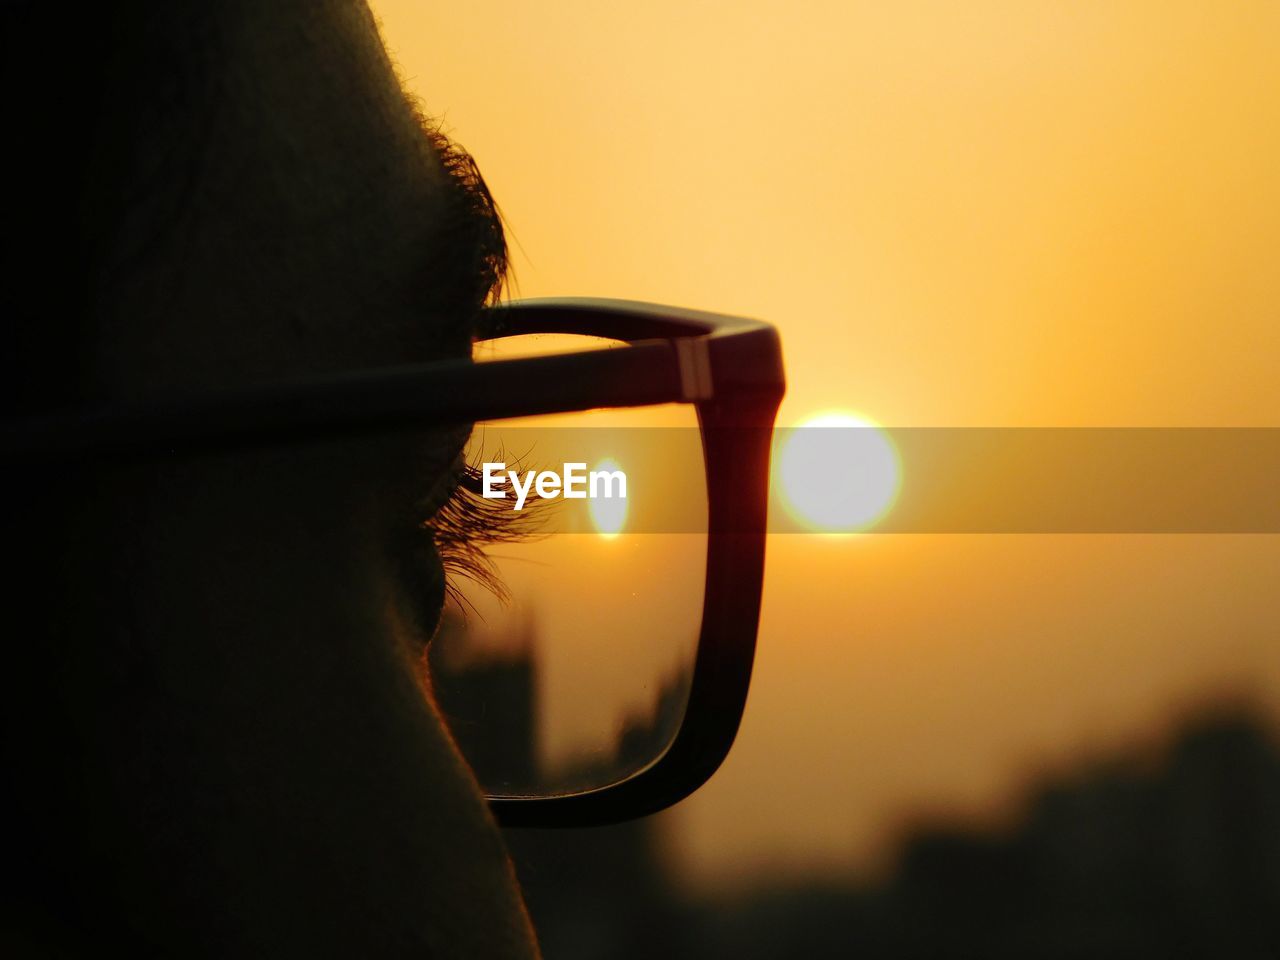 Close-up man eye against orange sky during sunset